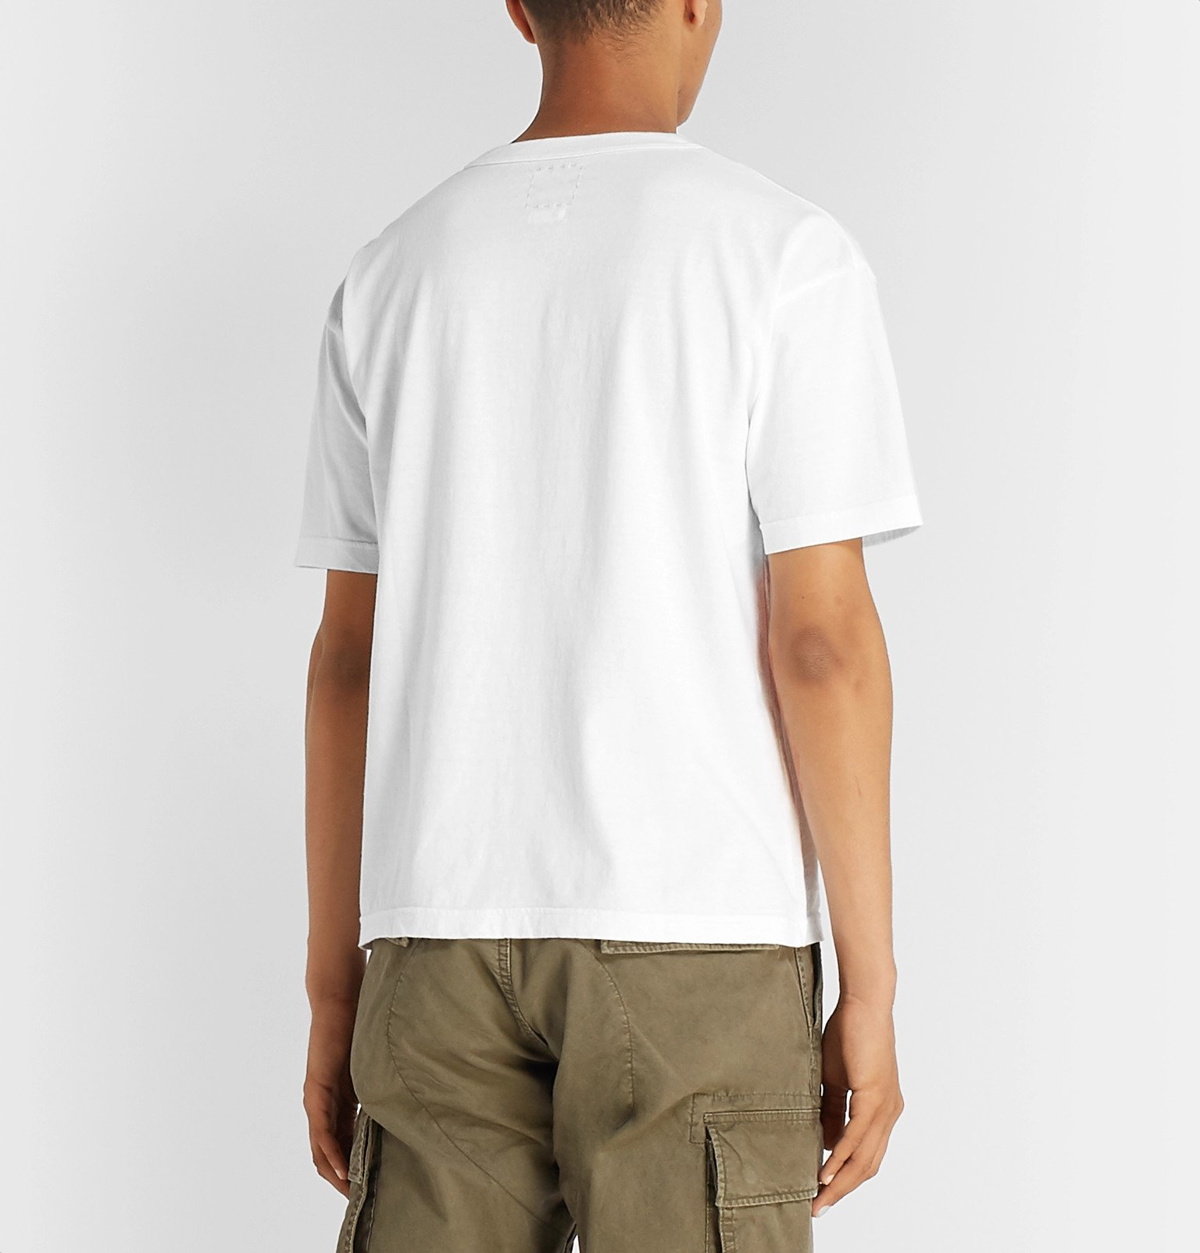 visvim - Printed Cotton-Jersey T-Shirt - White Visvim